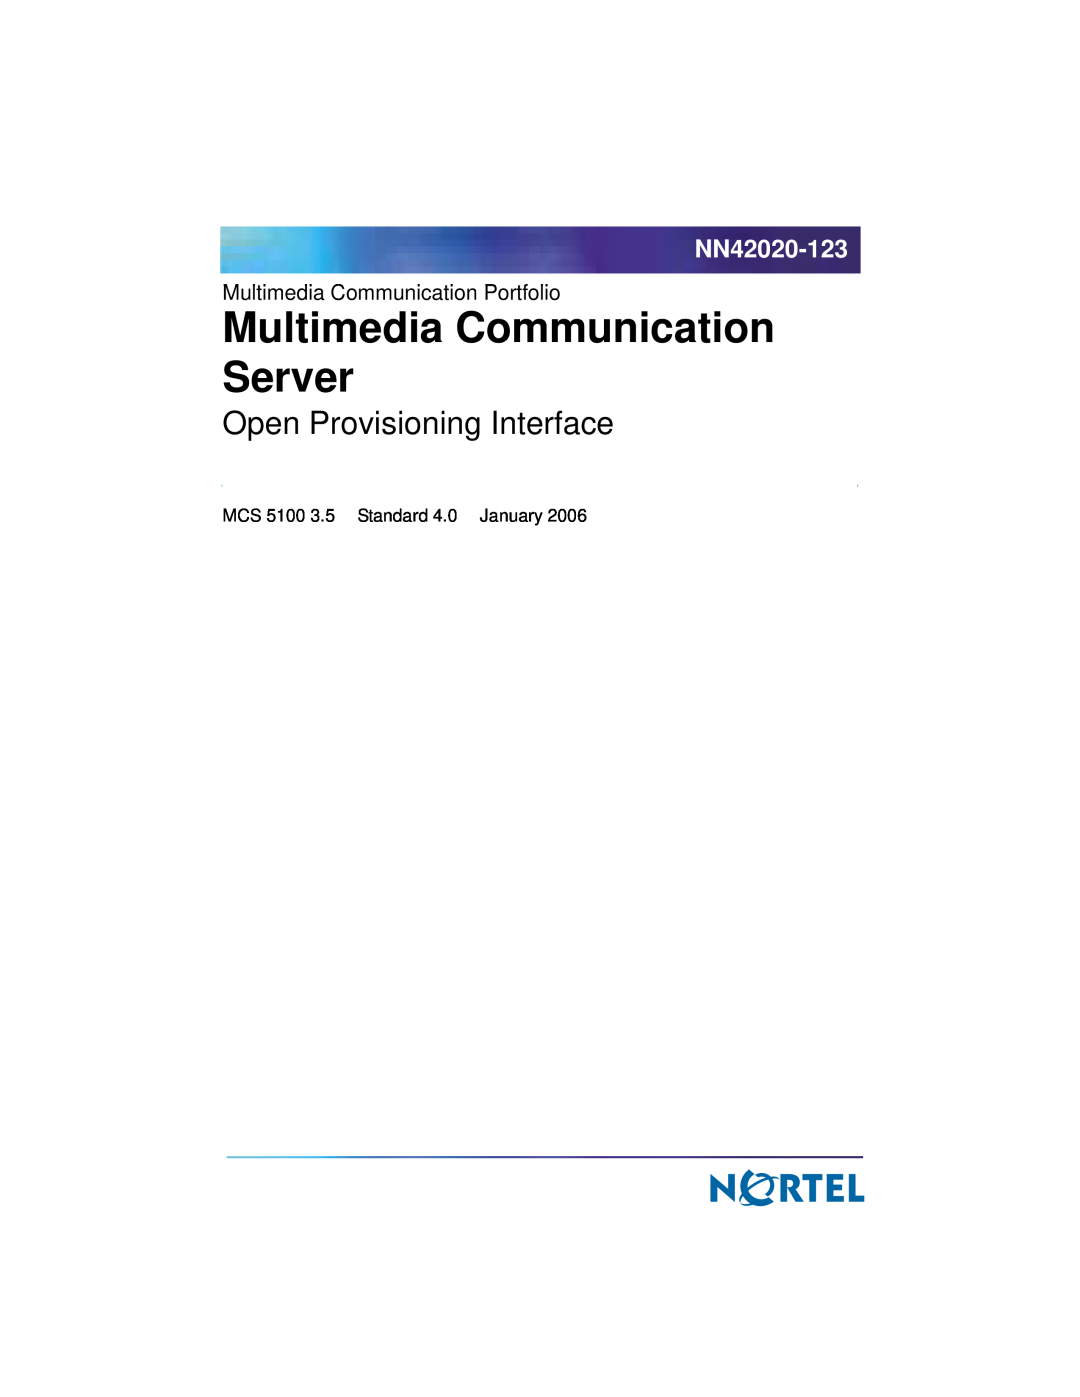 Nortel Networks NN42020-123 manual Multimedia Communication Server, Open Provisioning Interface 